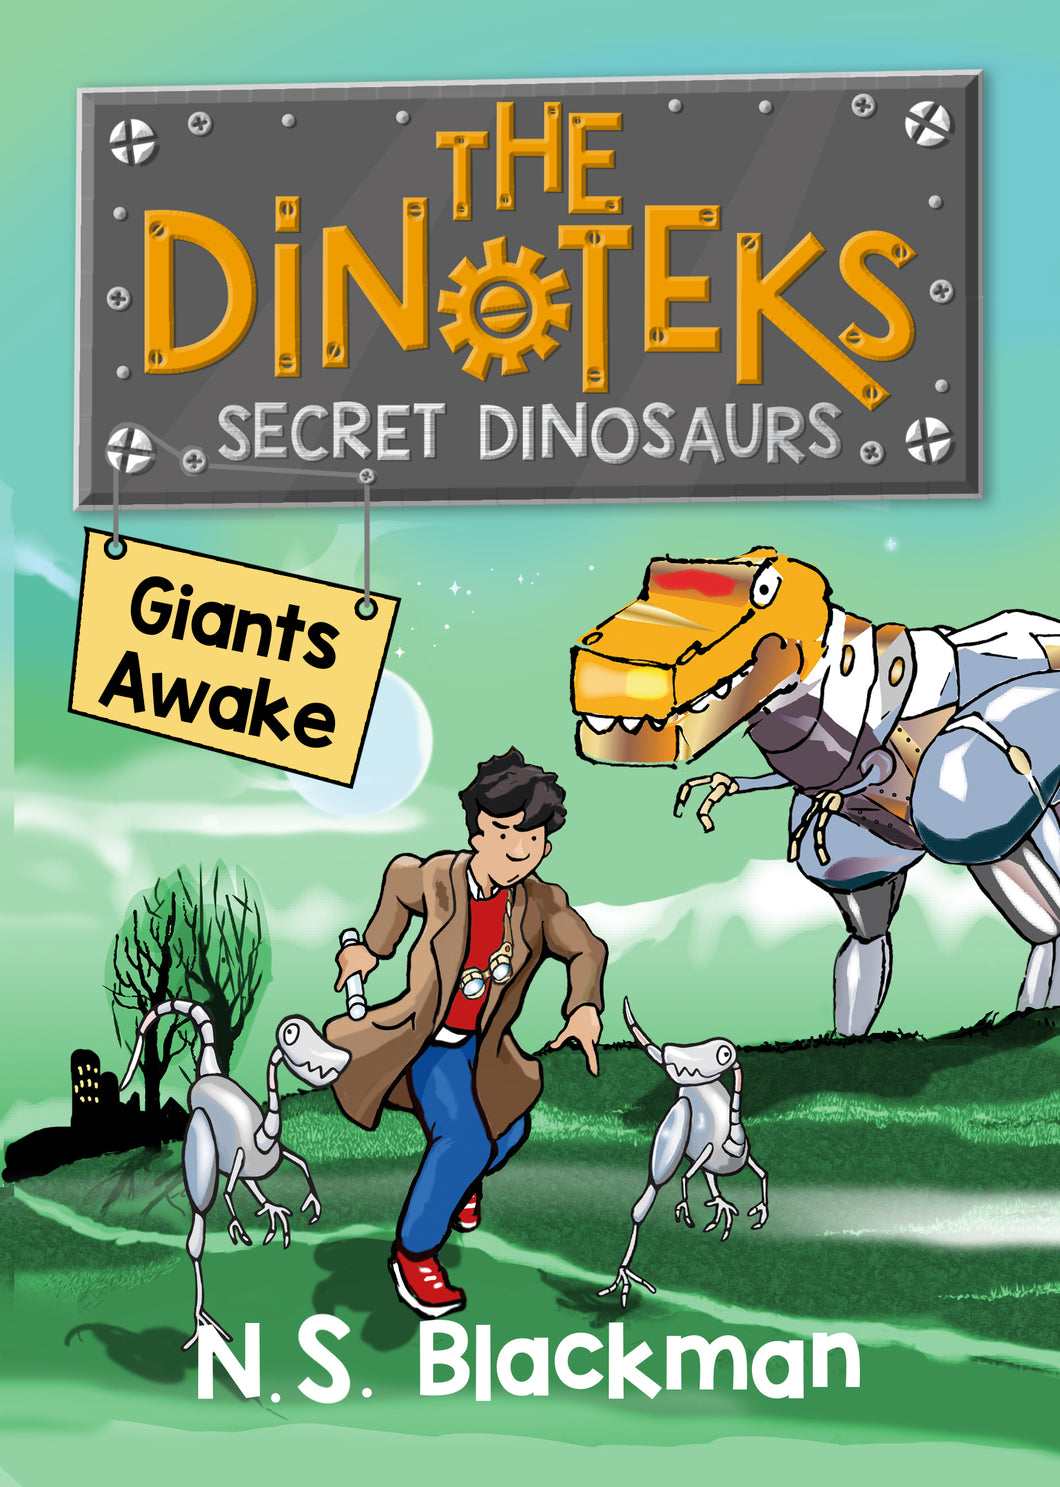 The Dinoteks #1 (Secret Dinosaurs)